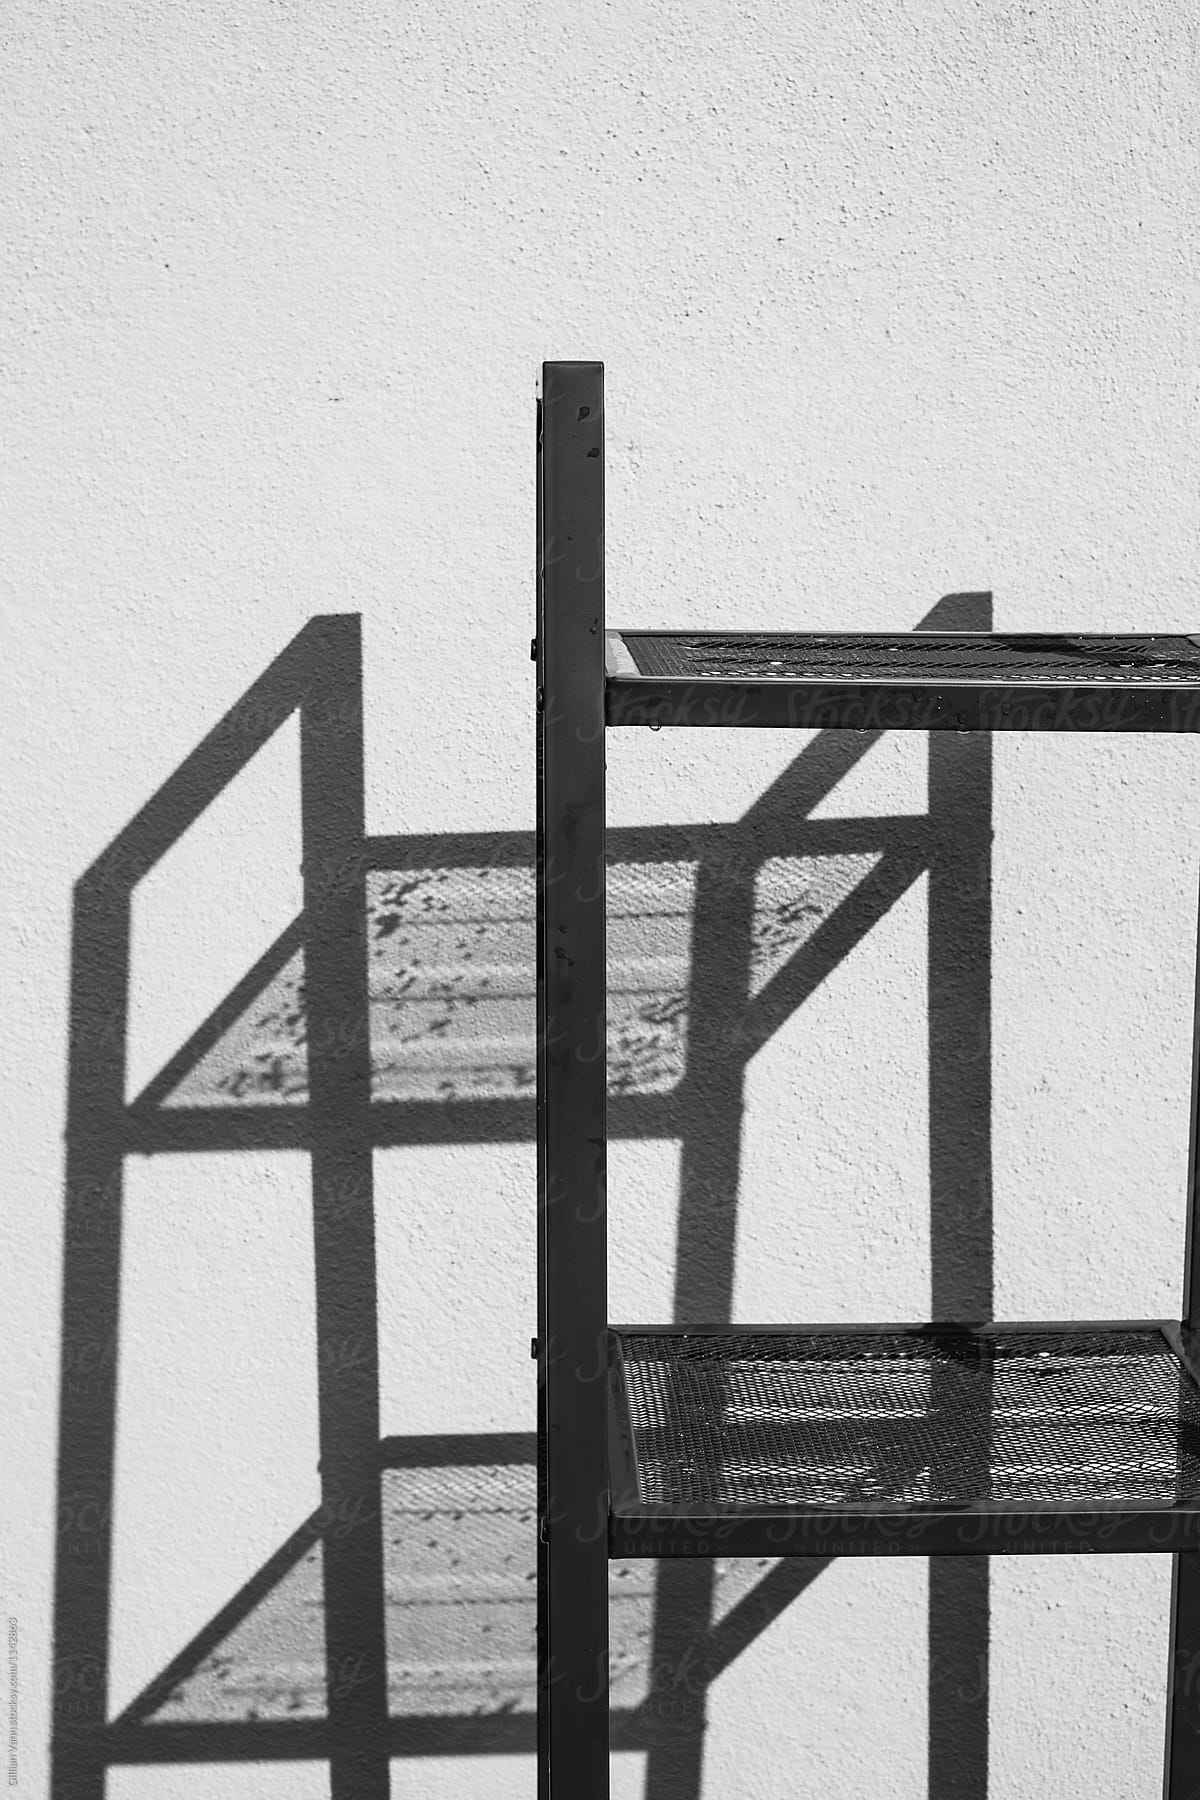 shadow abstract of a black mesh shelving unit